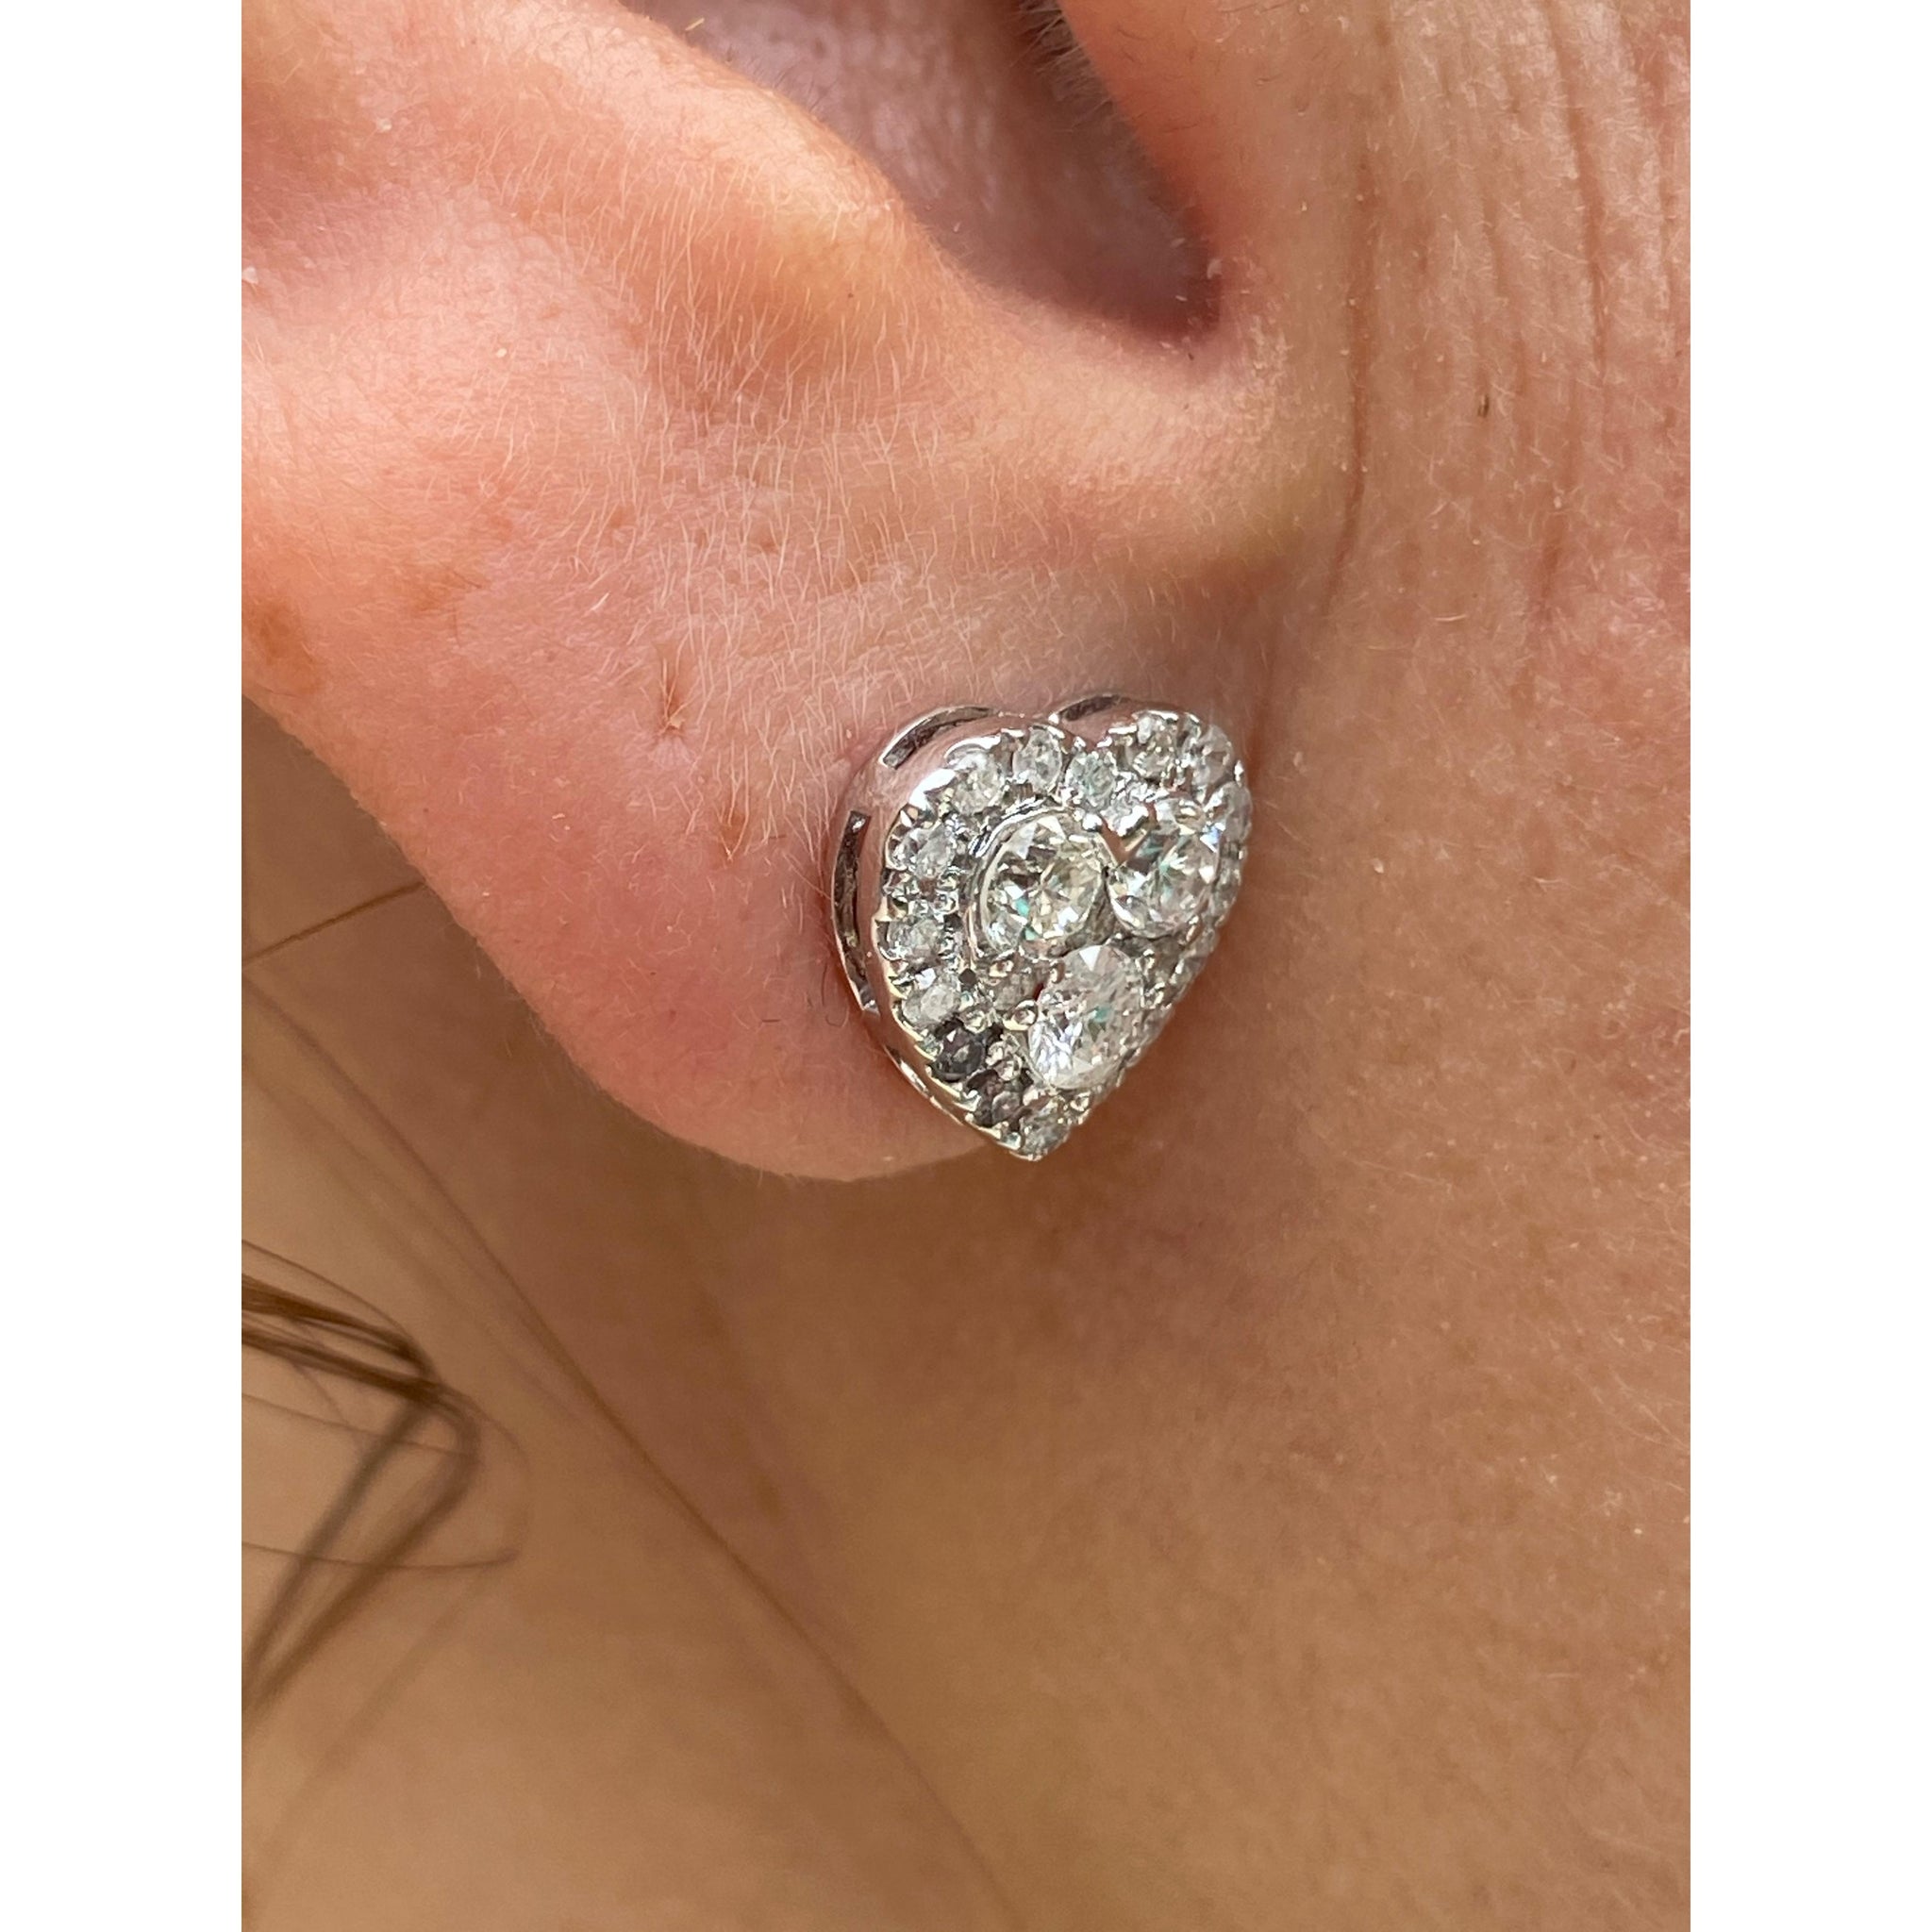 Heart Shape Diamond Stud Earrings in 18k white gold - ASSAY